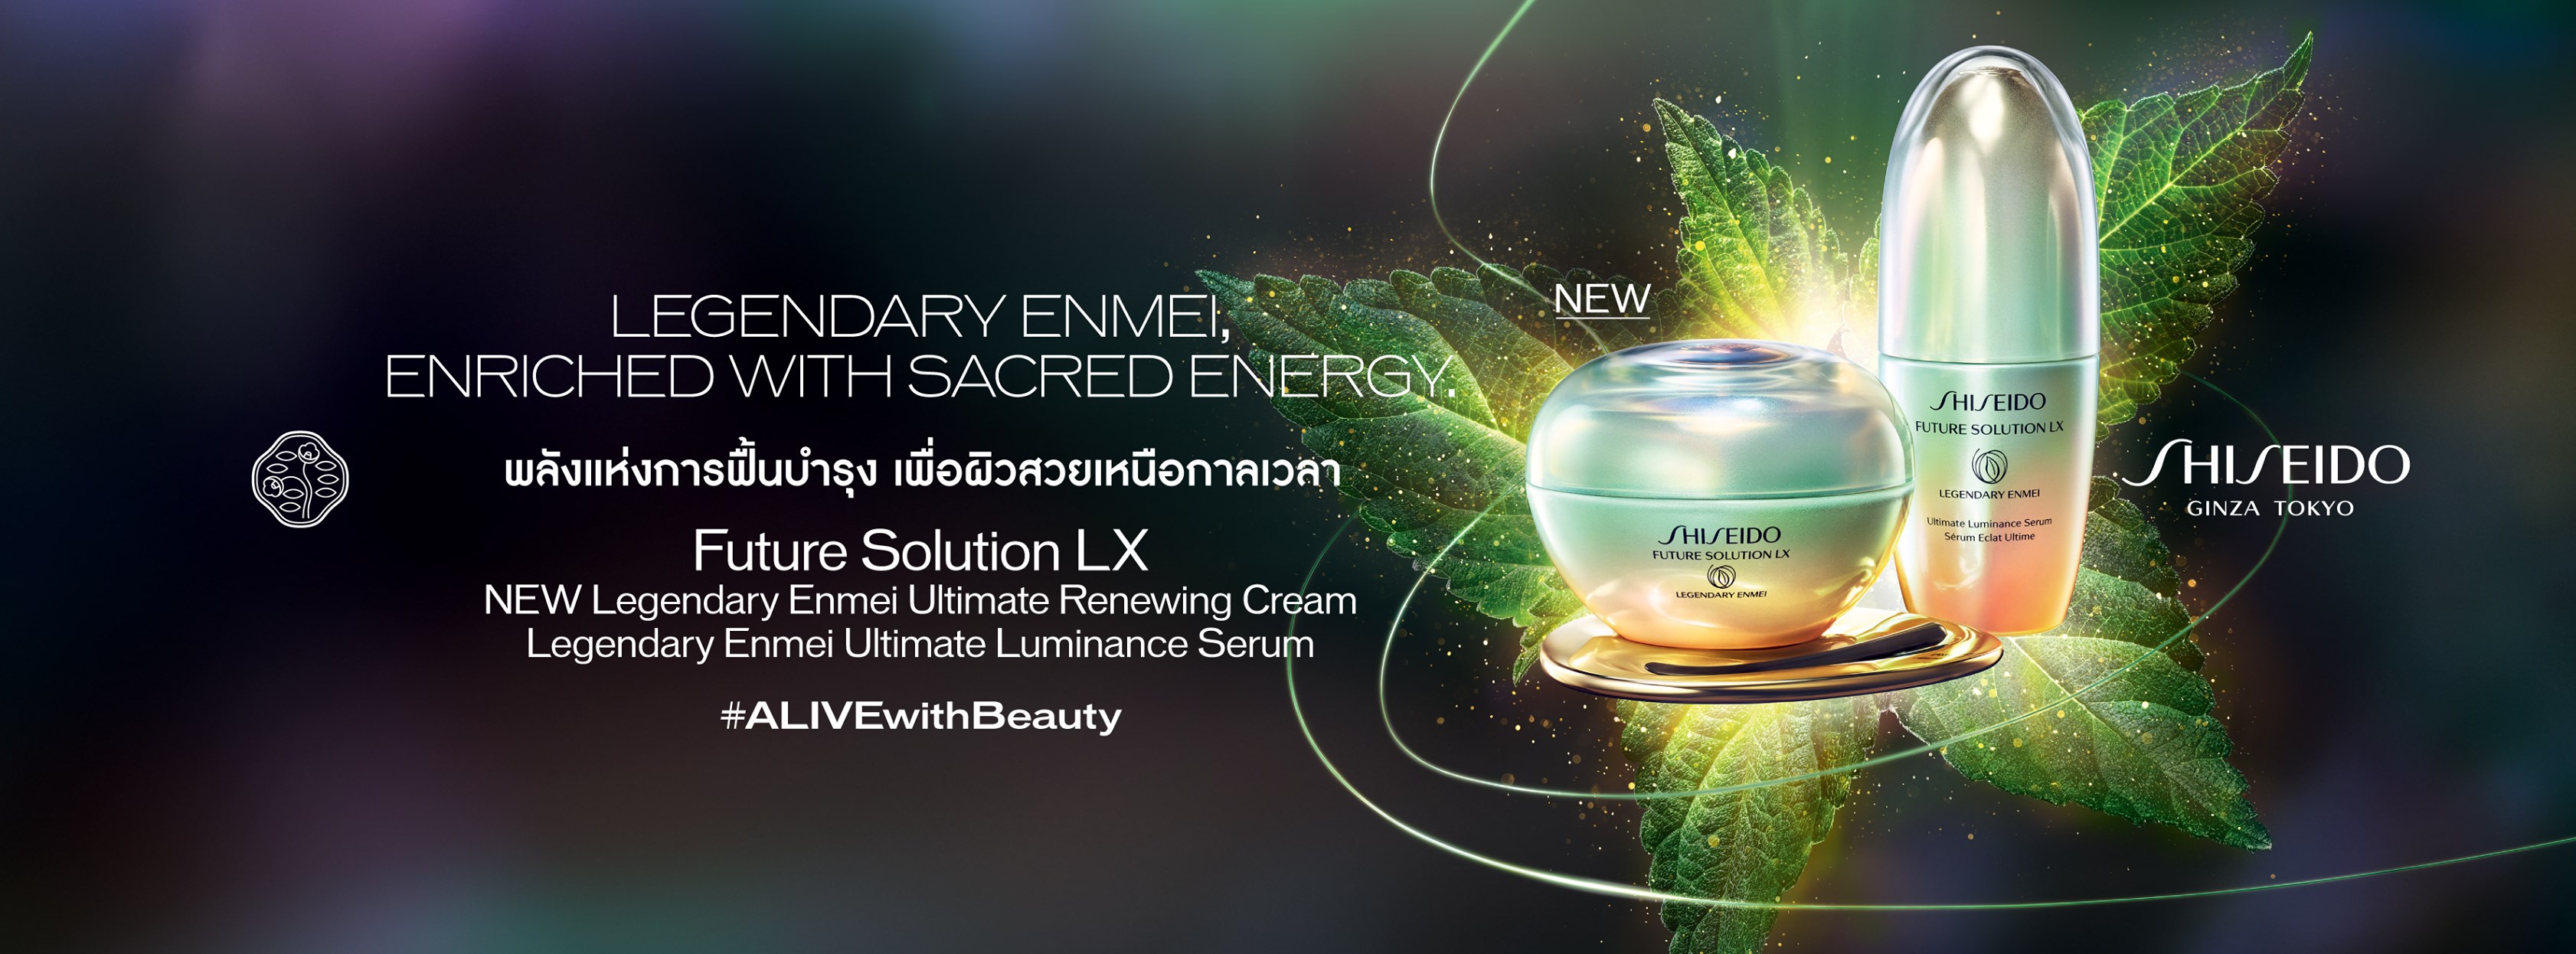 Shiseido,future solution lx Legendary Enmei ultimate luminance serum,Shiseido serum,เซรั่ม,Shiseido serum รีวิว